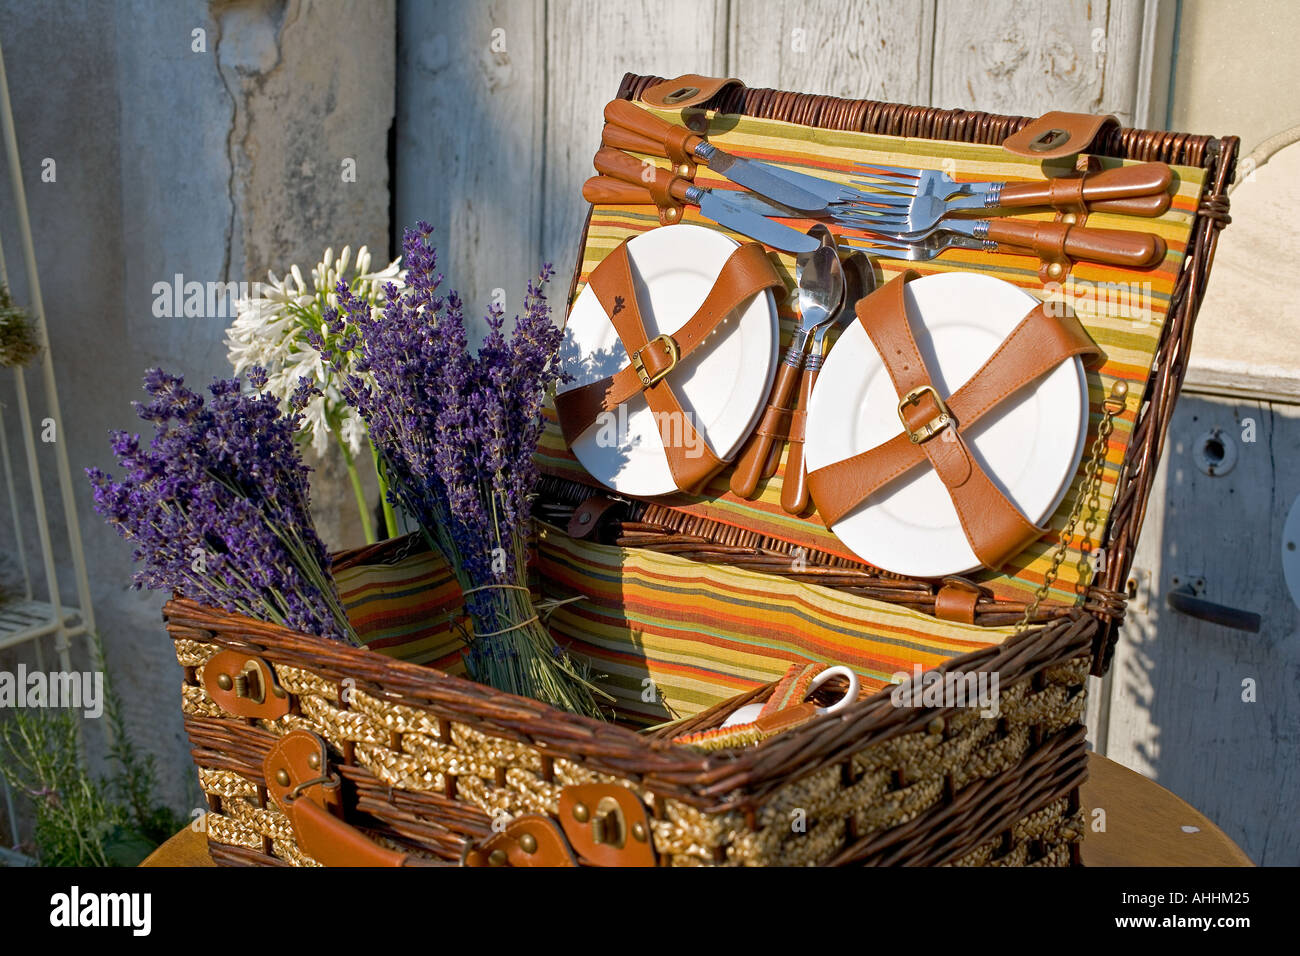 Picknick IN RETRO WEIDENKORB mit Lavendel Blumen Sträuße PROVENCE FRANKREICH EUROPA Stockfoto